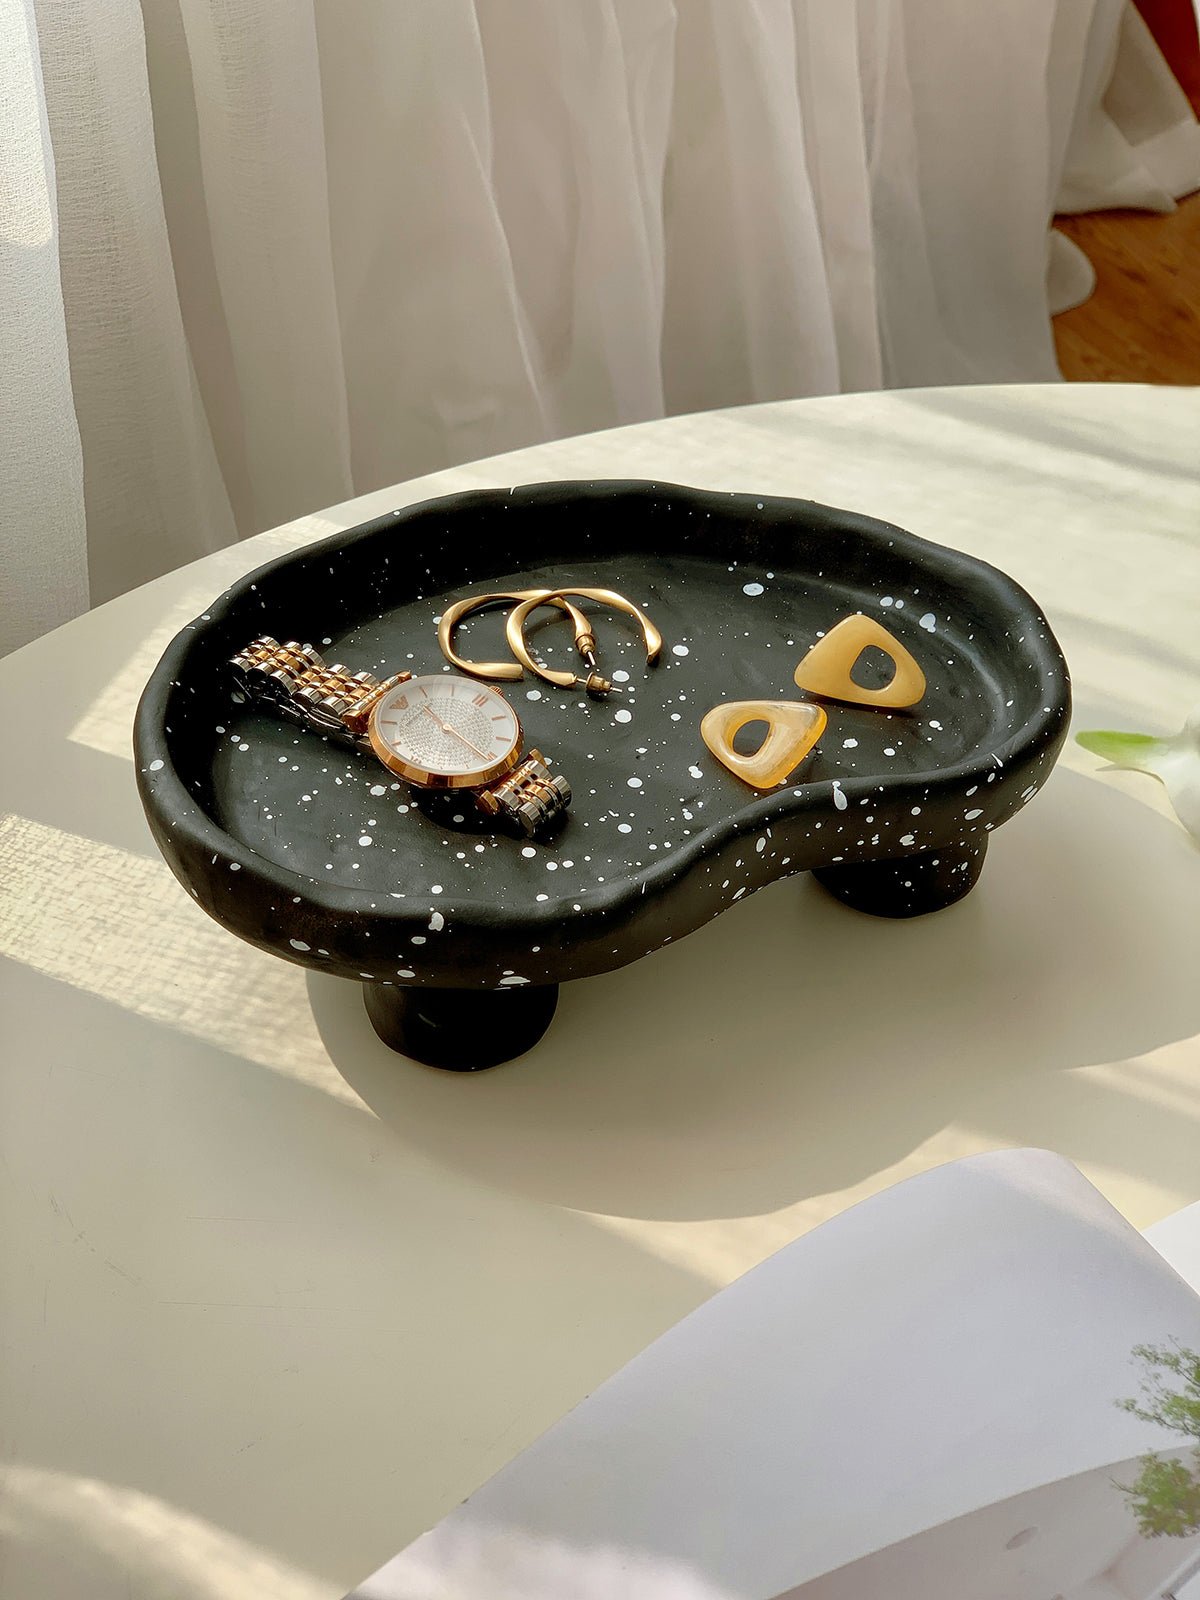 Yin Yang Resin Jewellery Trinket Tray